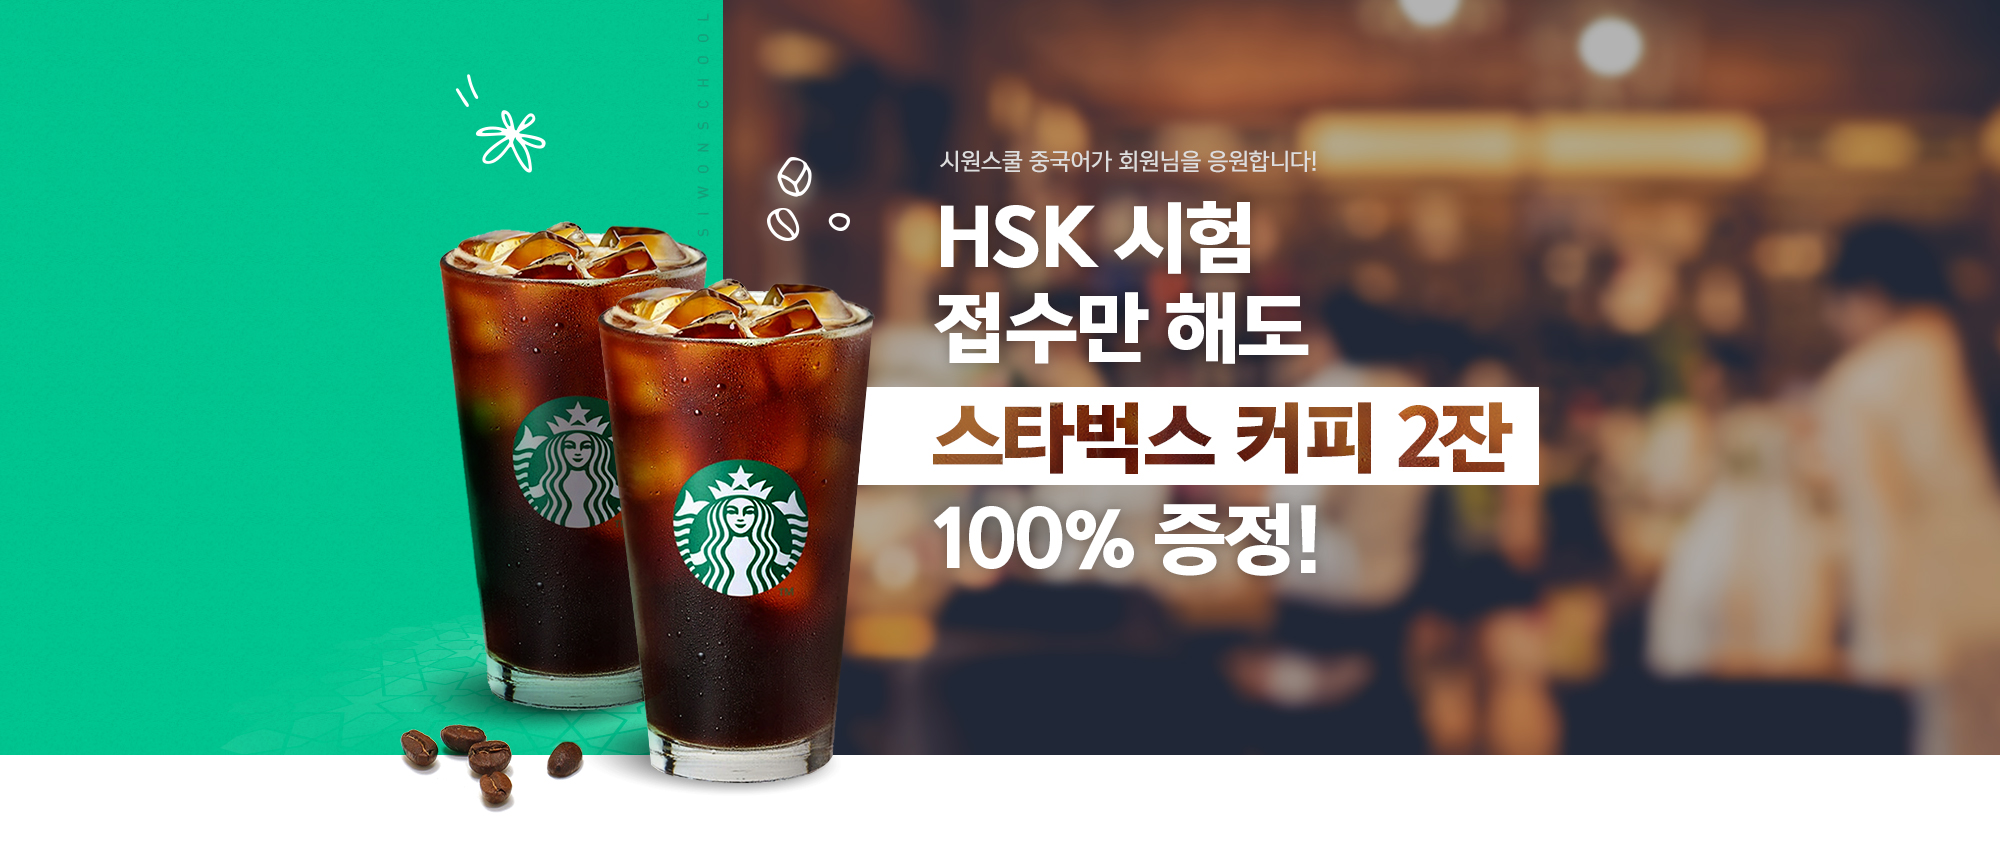 HSK 시험 접수만 해도 스타벅스 커피 2잔 100% 증정!